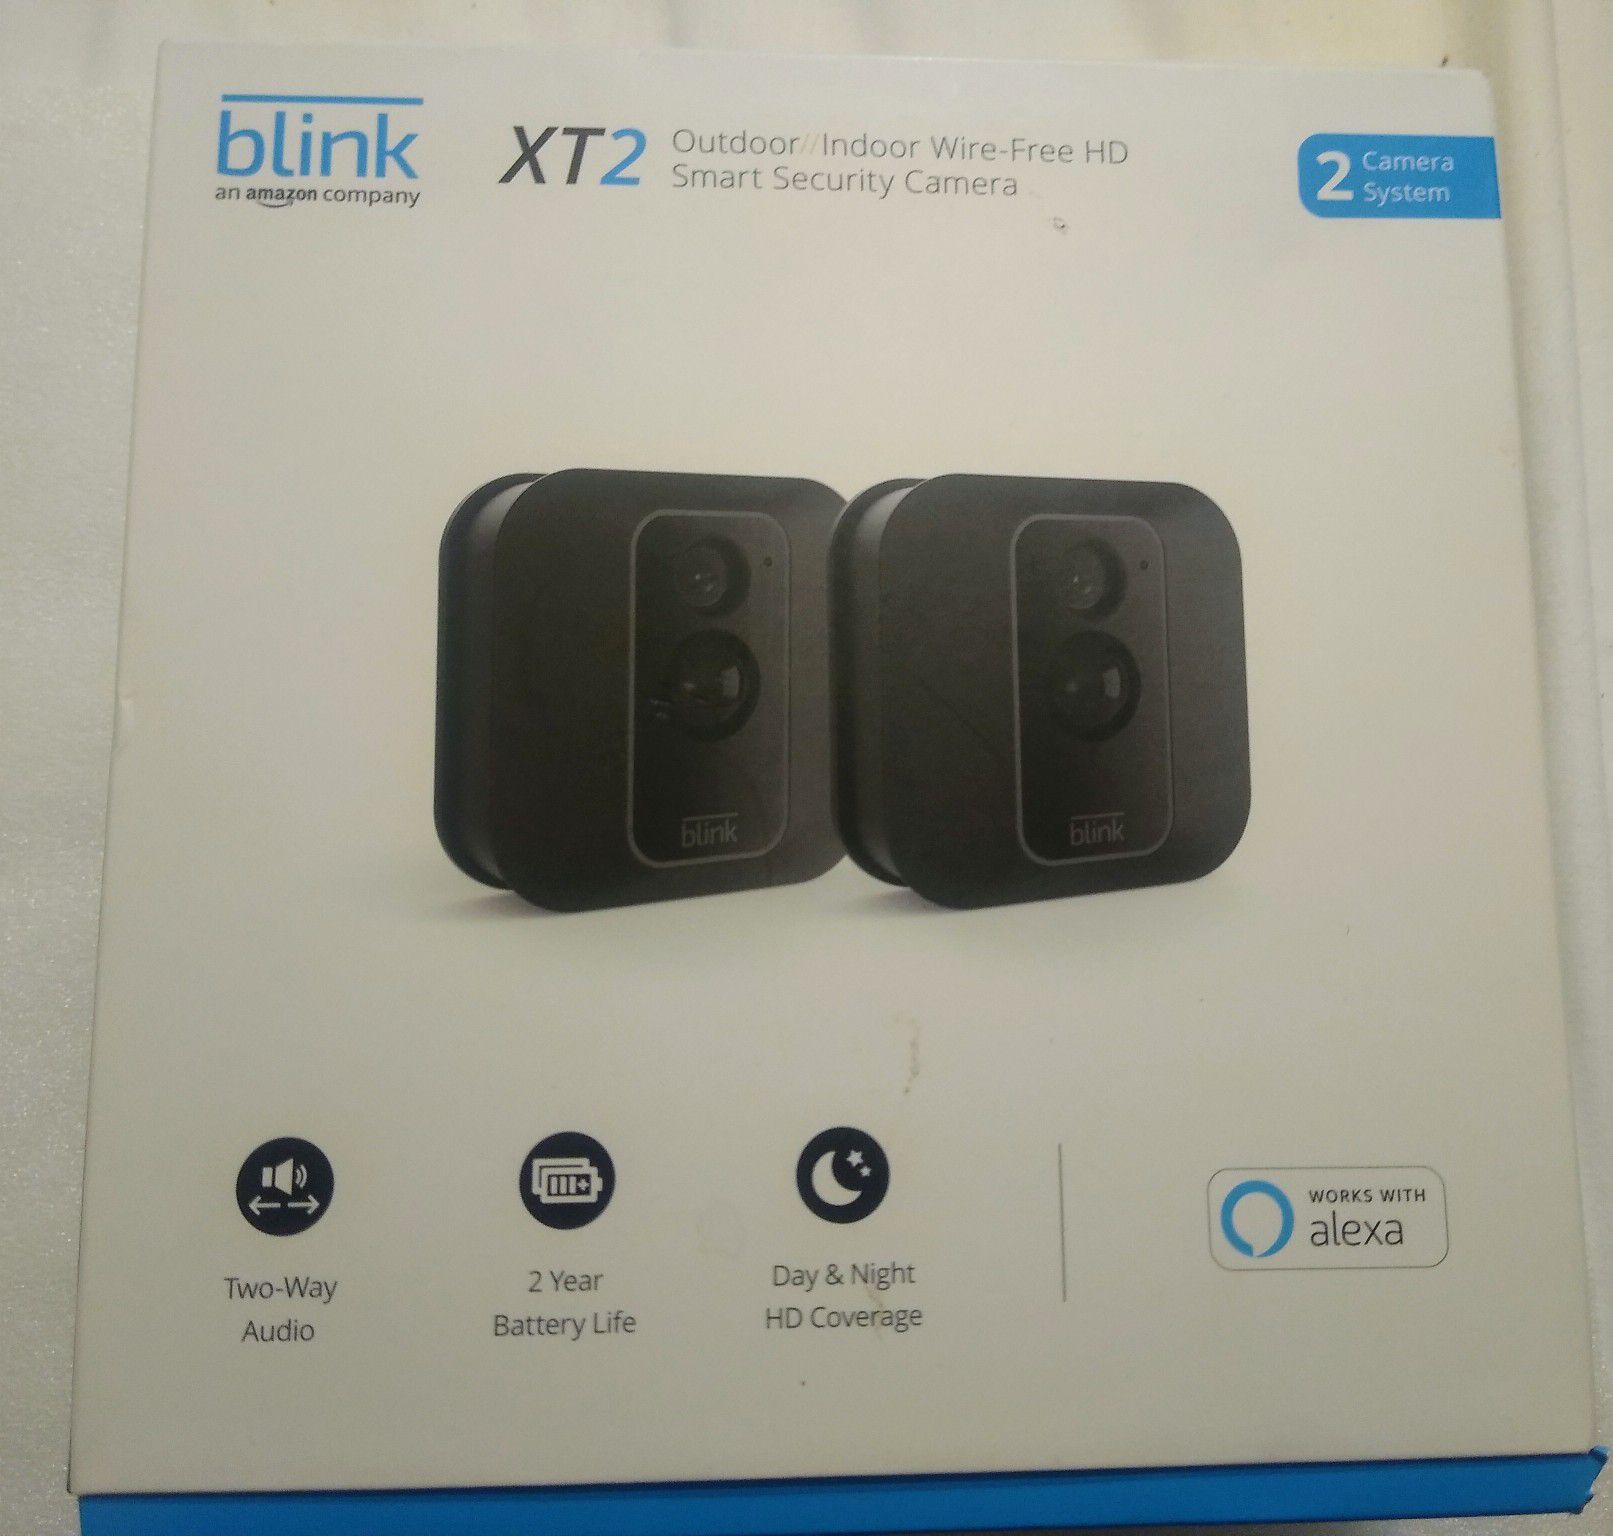 Blink Home Security Blink XT2 Outdoor/Indoor Smart Security Camera with cloud storage included, 2-way audio